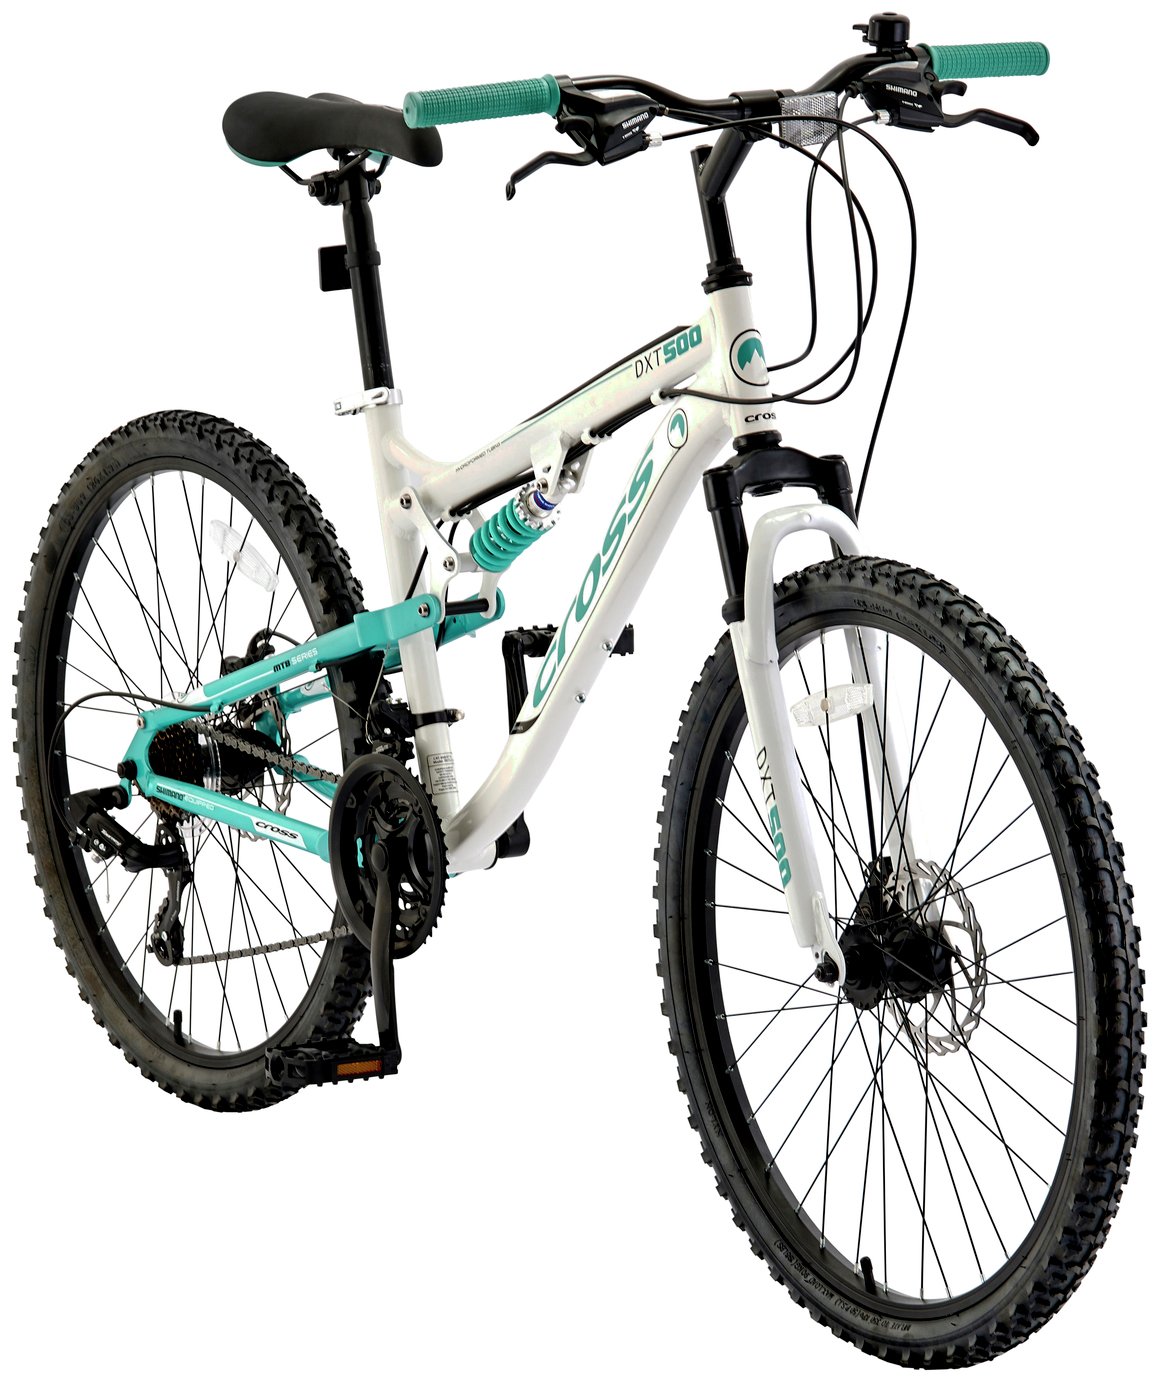 Cross DS27L5 26 inch Wheel Size Womens Mountain Bike review